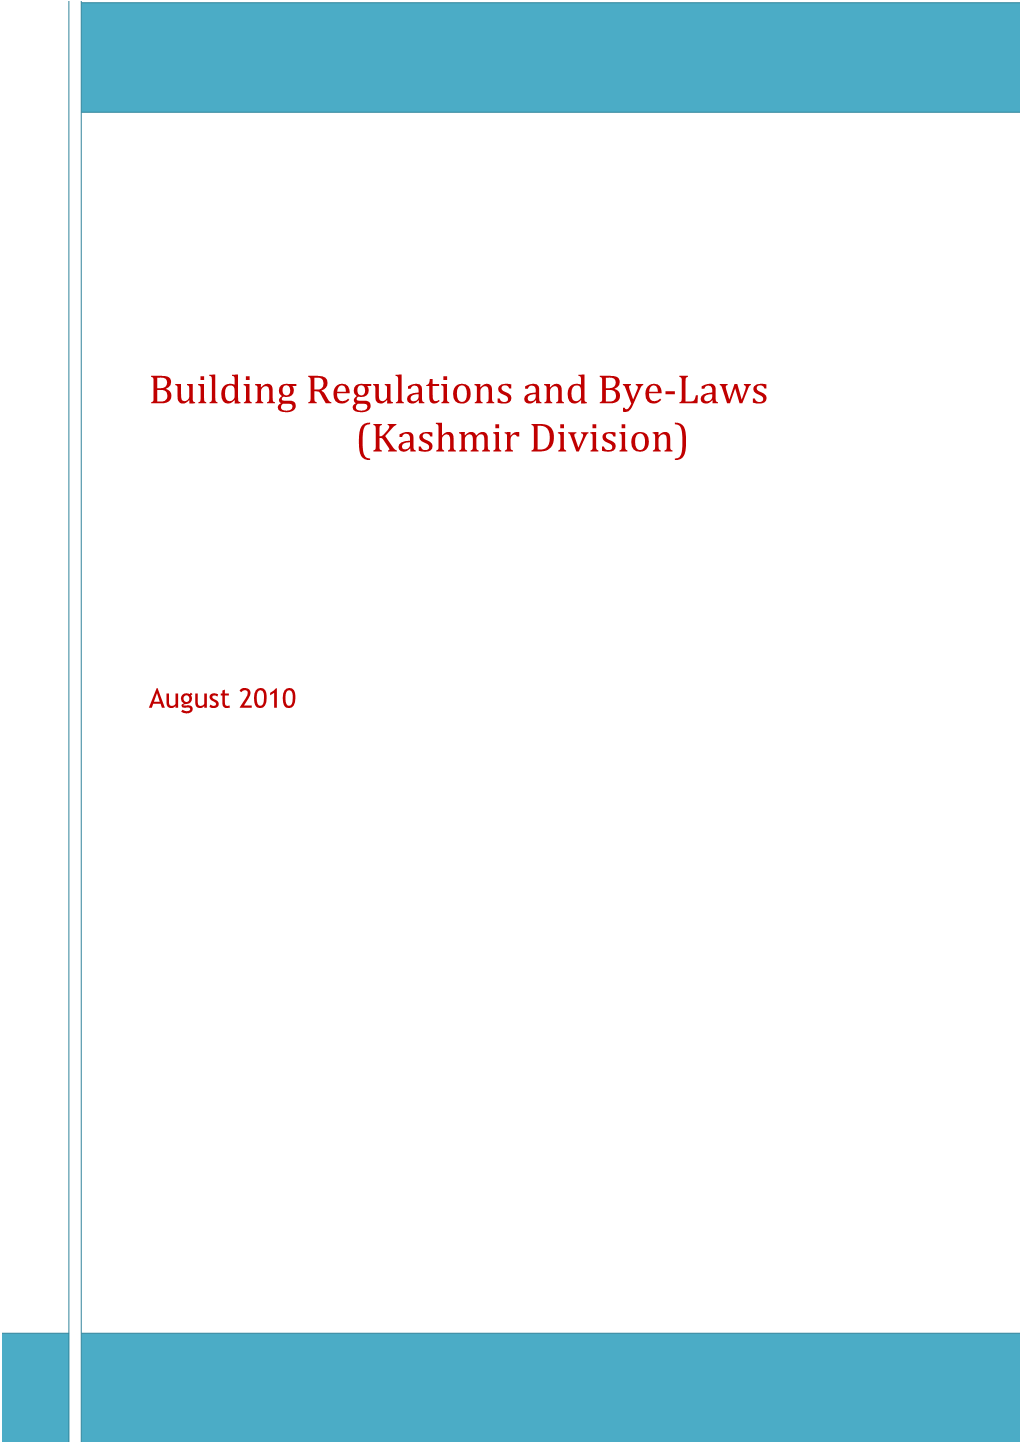 Building Regulations and Bye-Laws (Kashmir Division)